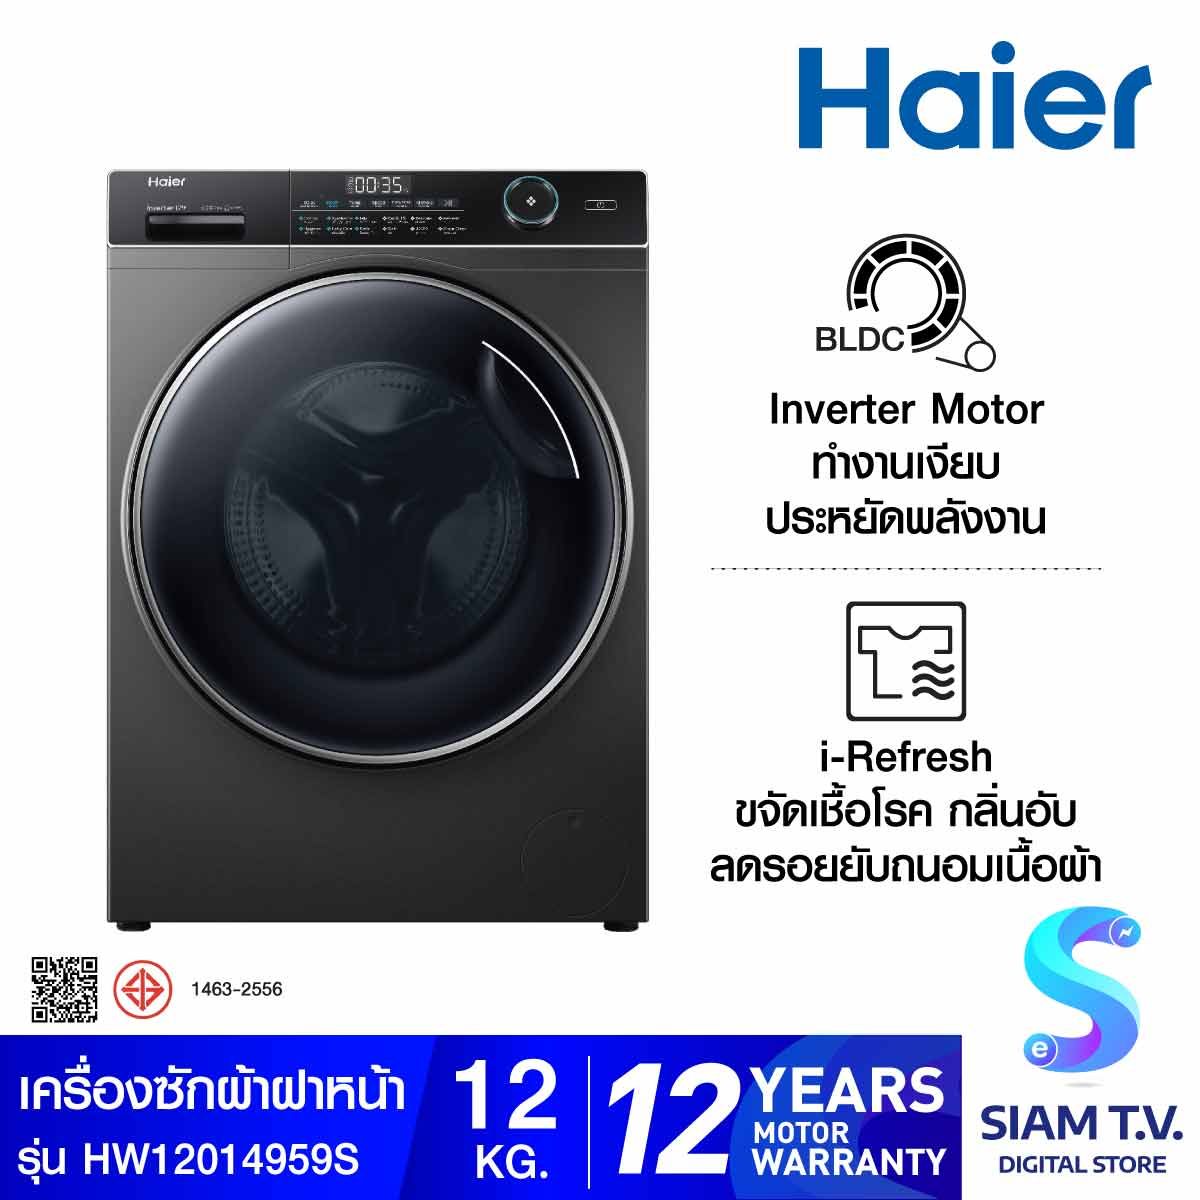 HAIER  เครื่องซักผ้าฝาหน้า 12Kg. INVERTER สีเทา รุ่น HW120-BP14959S6